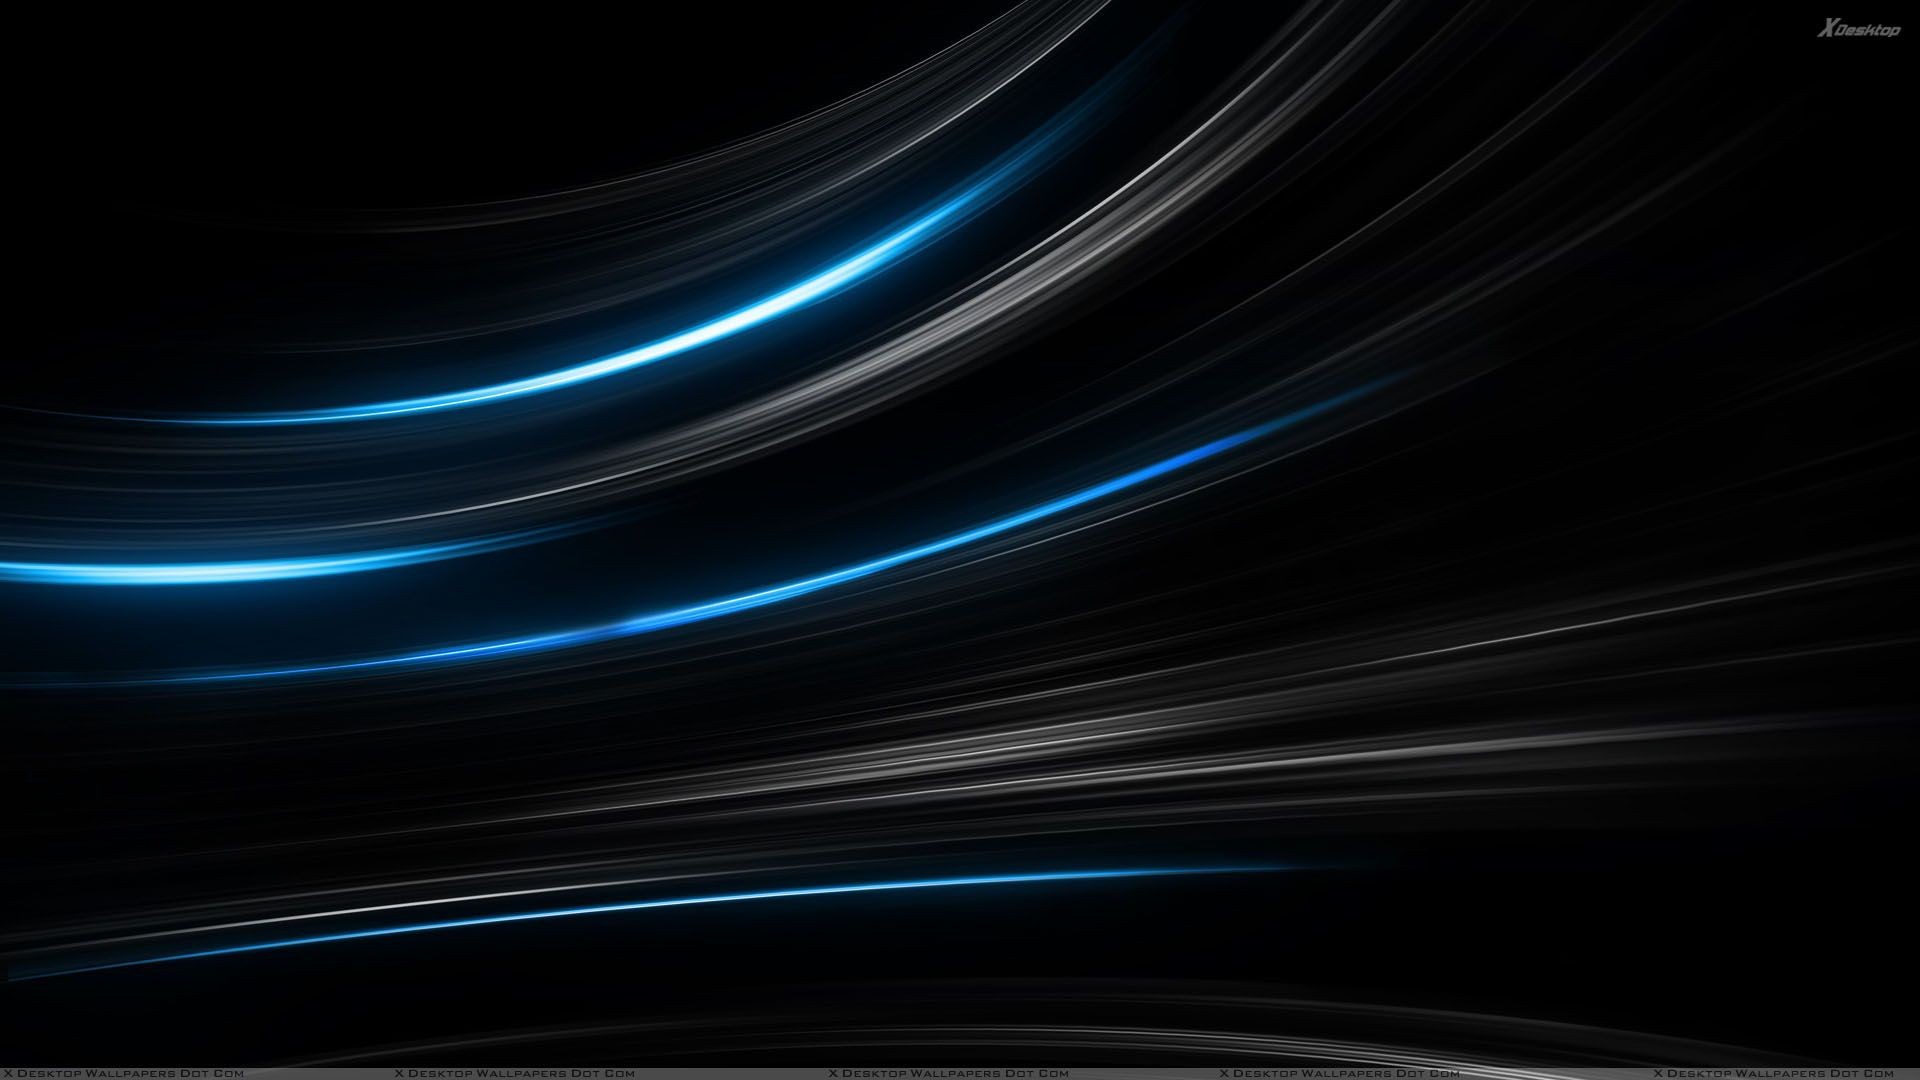 Blue and Black background ·① Download free High Resolution backgrounds for desktop, mobile